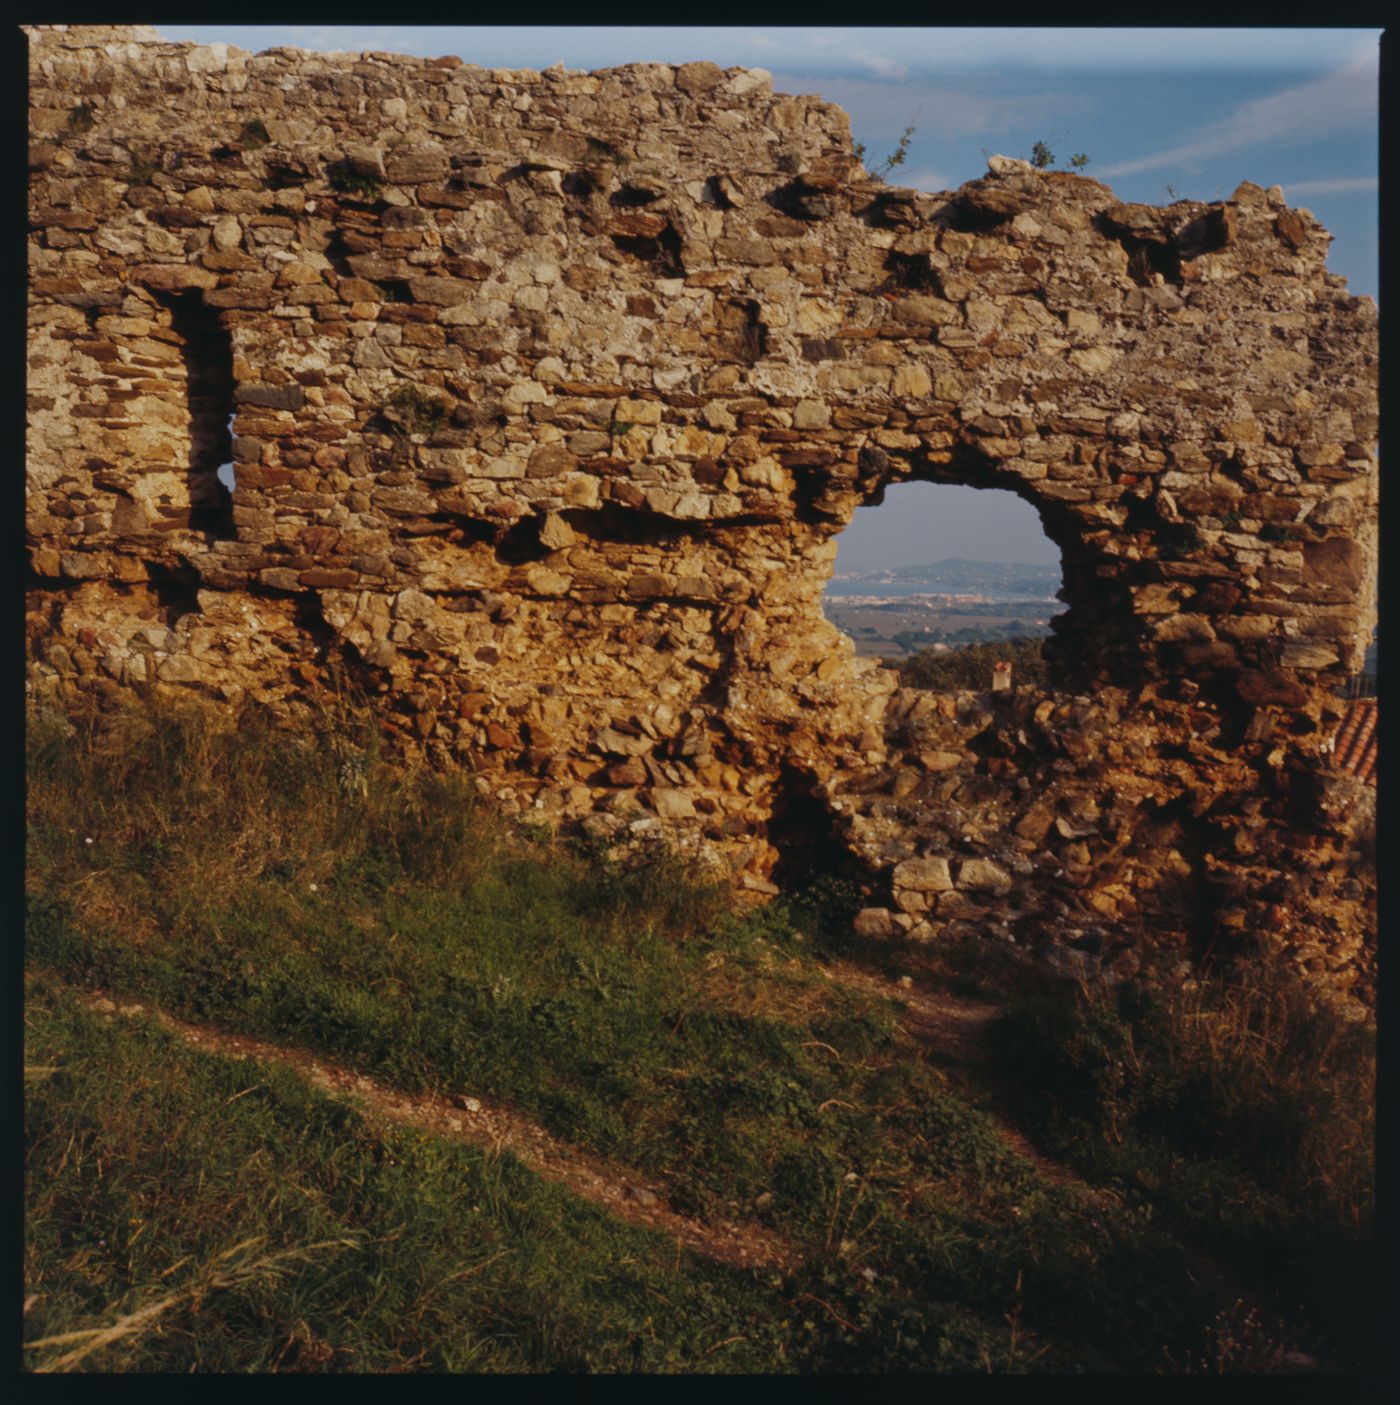 View seen through a ruin, France